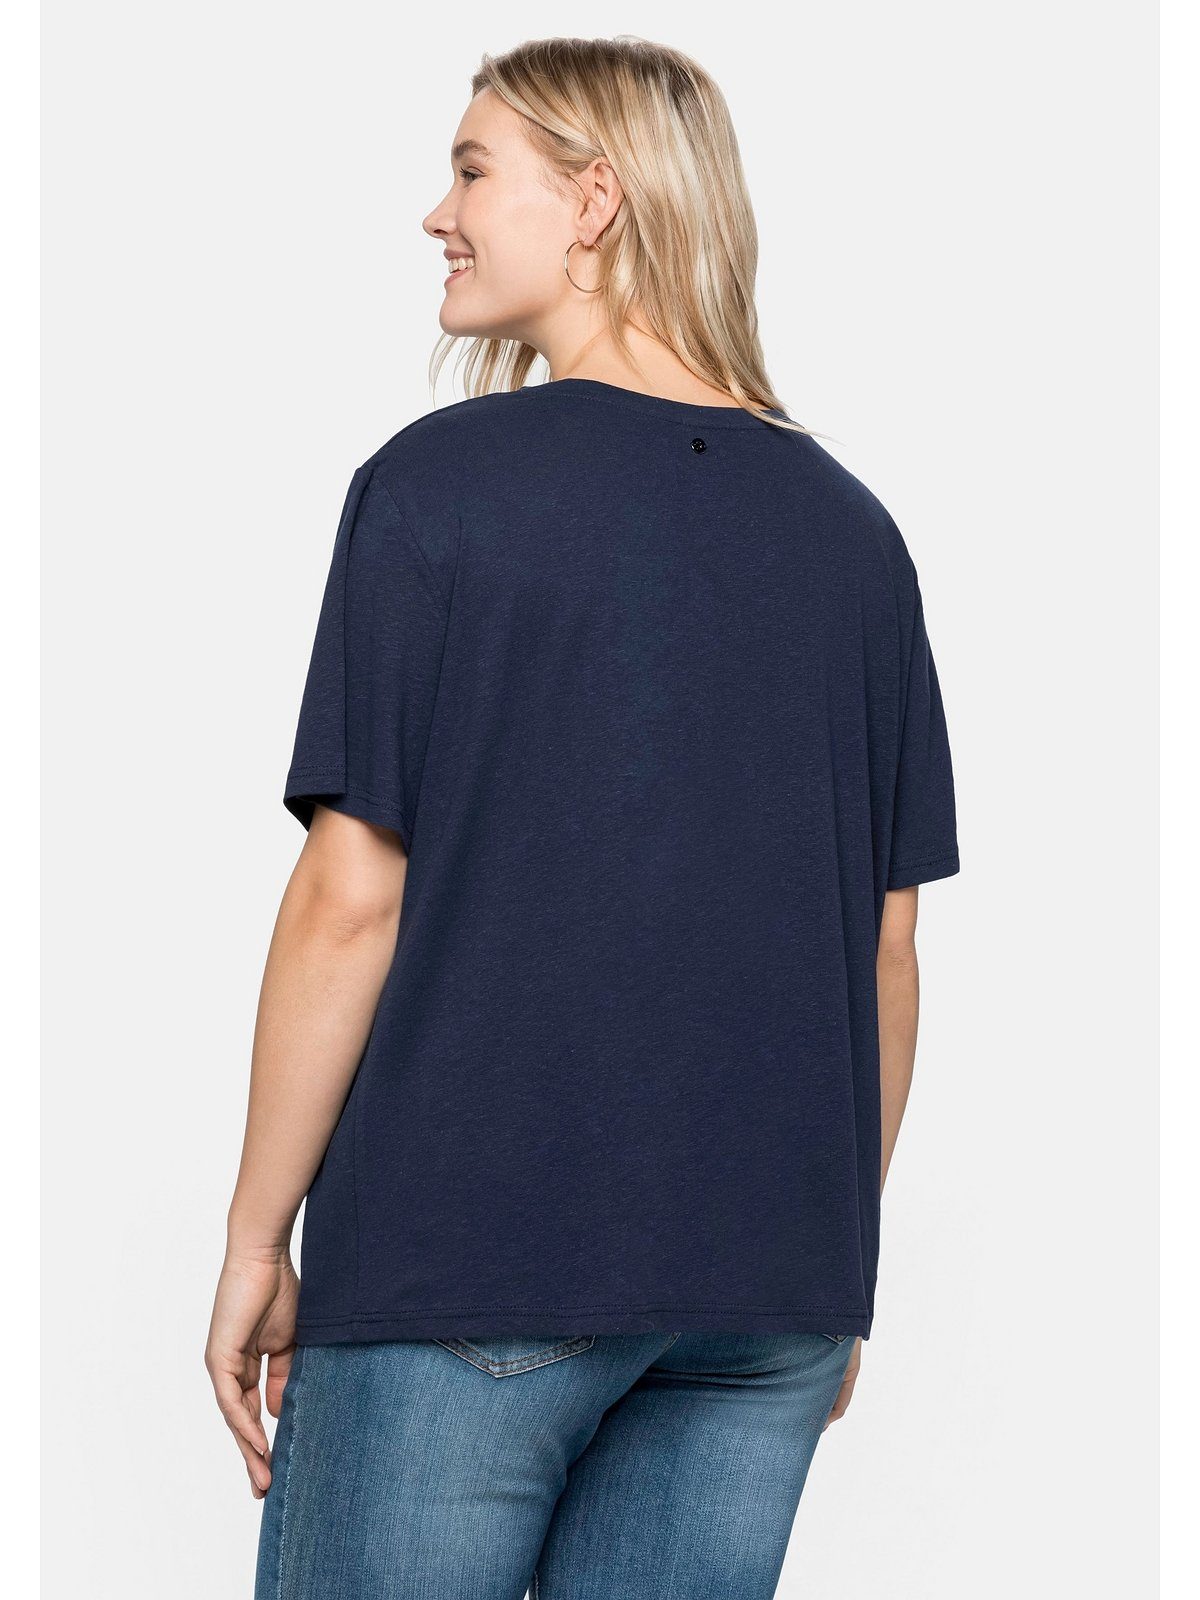 Sheego T-Shirt Große Größen aus edlem Leinen-Viskose-Mix marine